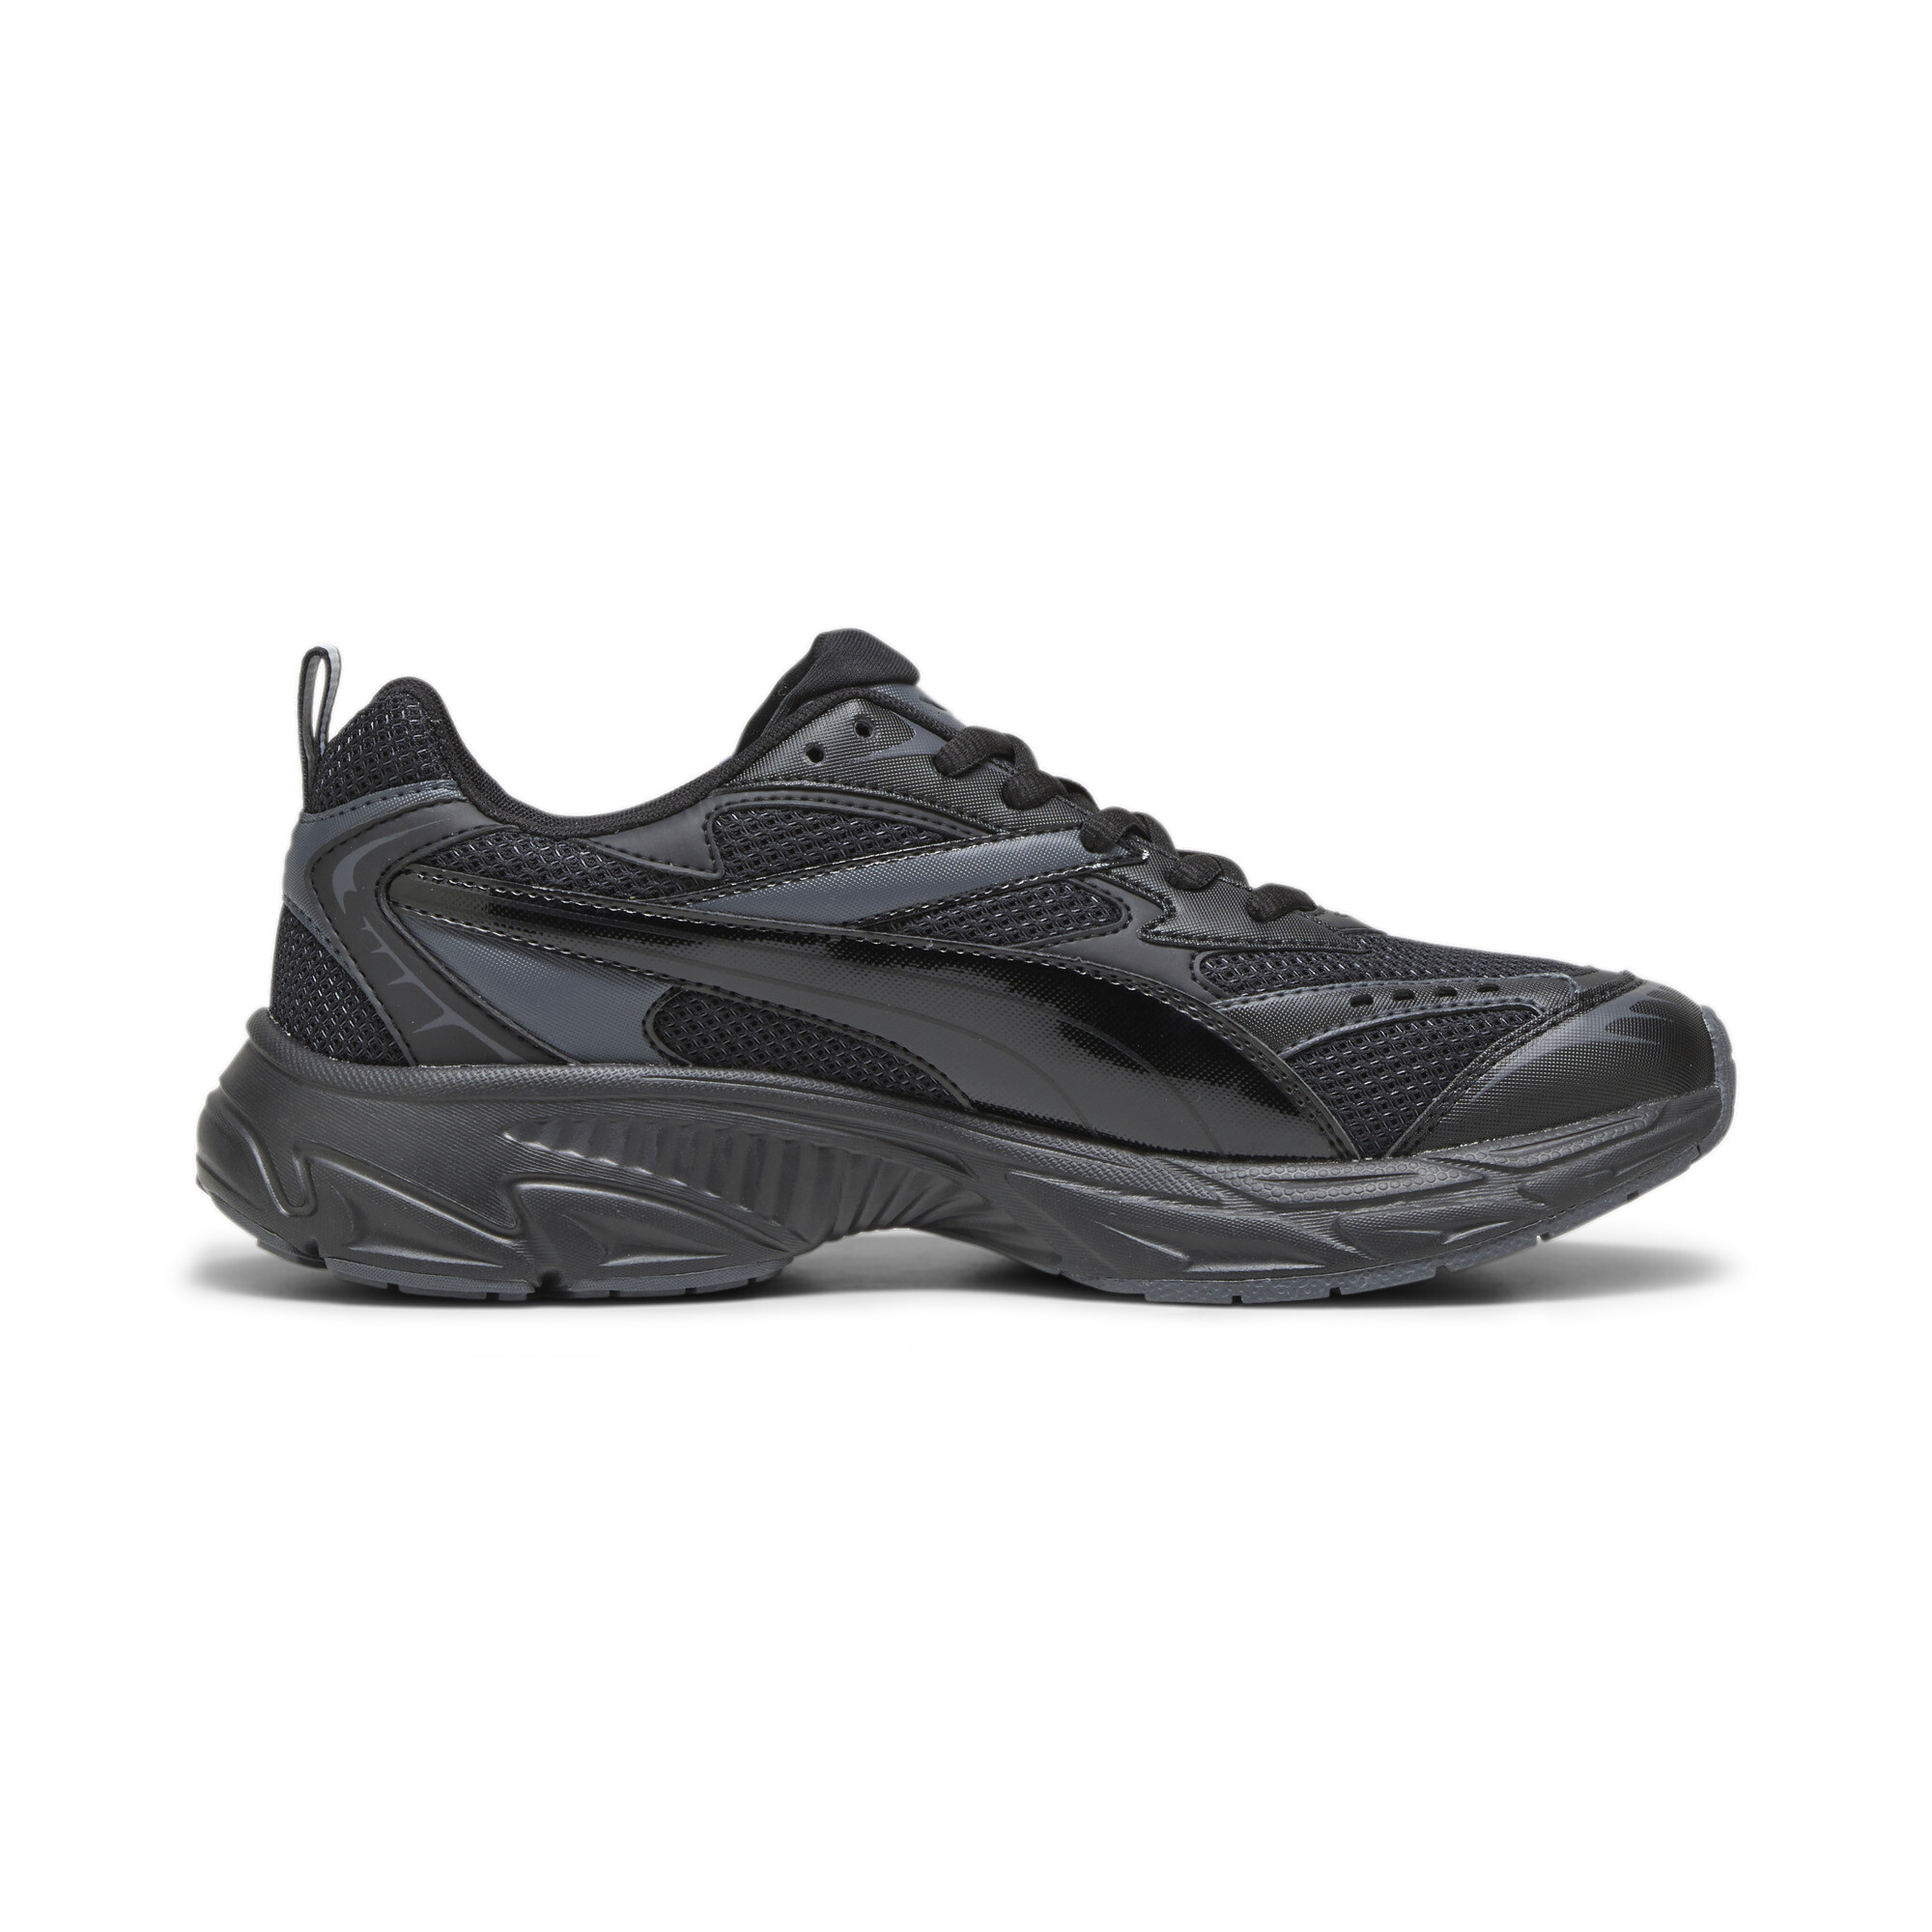 Men's PUMA Morphic Base Sneakers In Black, Size EU 37.5